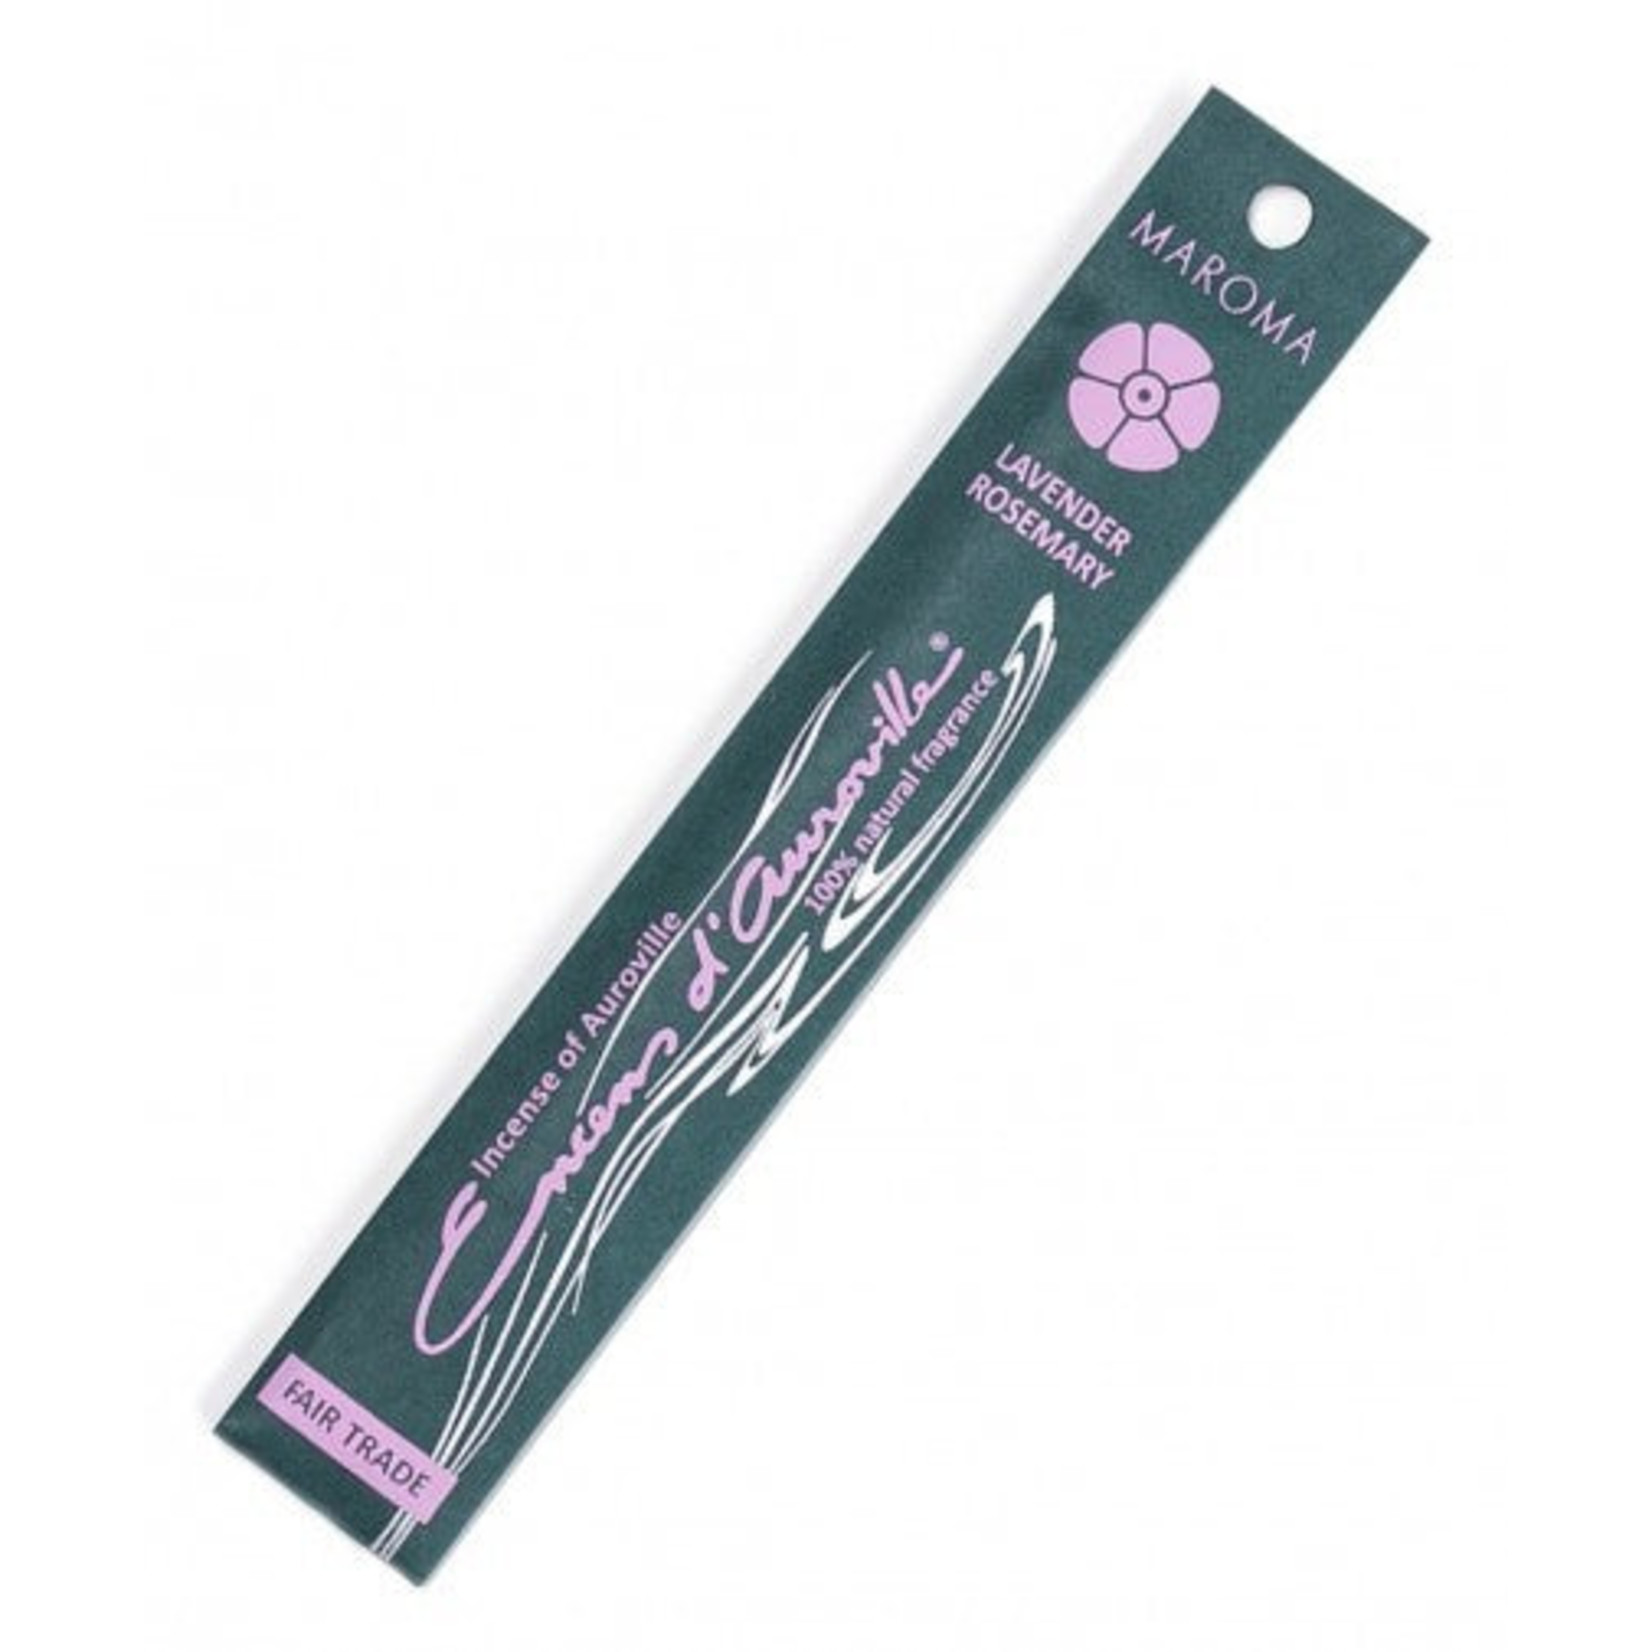 Maroma Maroma - Incense Sticks Lavender Rosemary - 10 Count